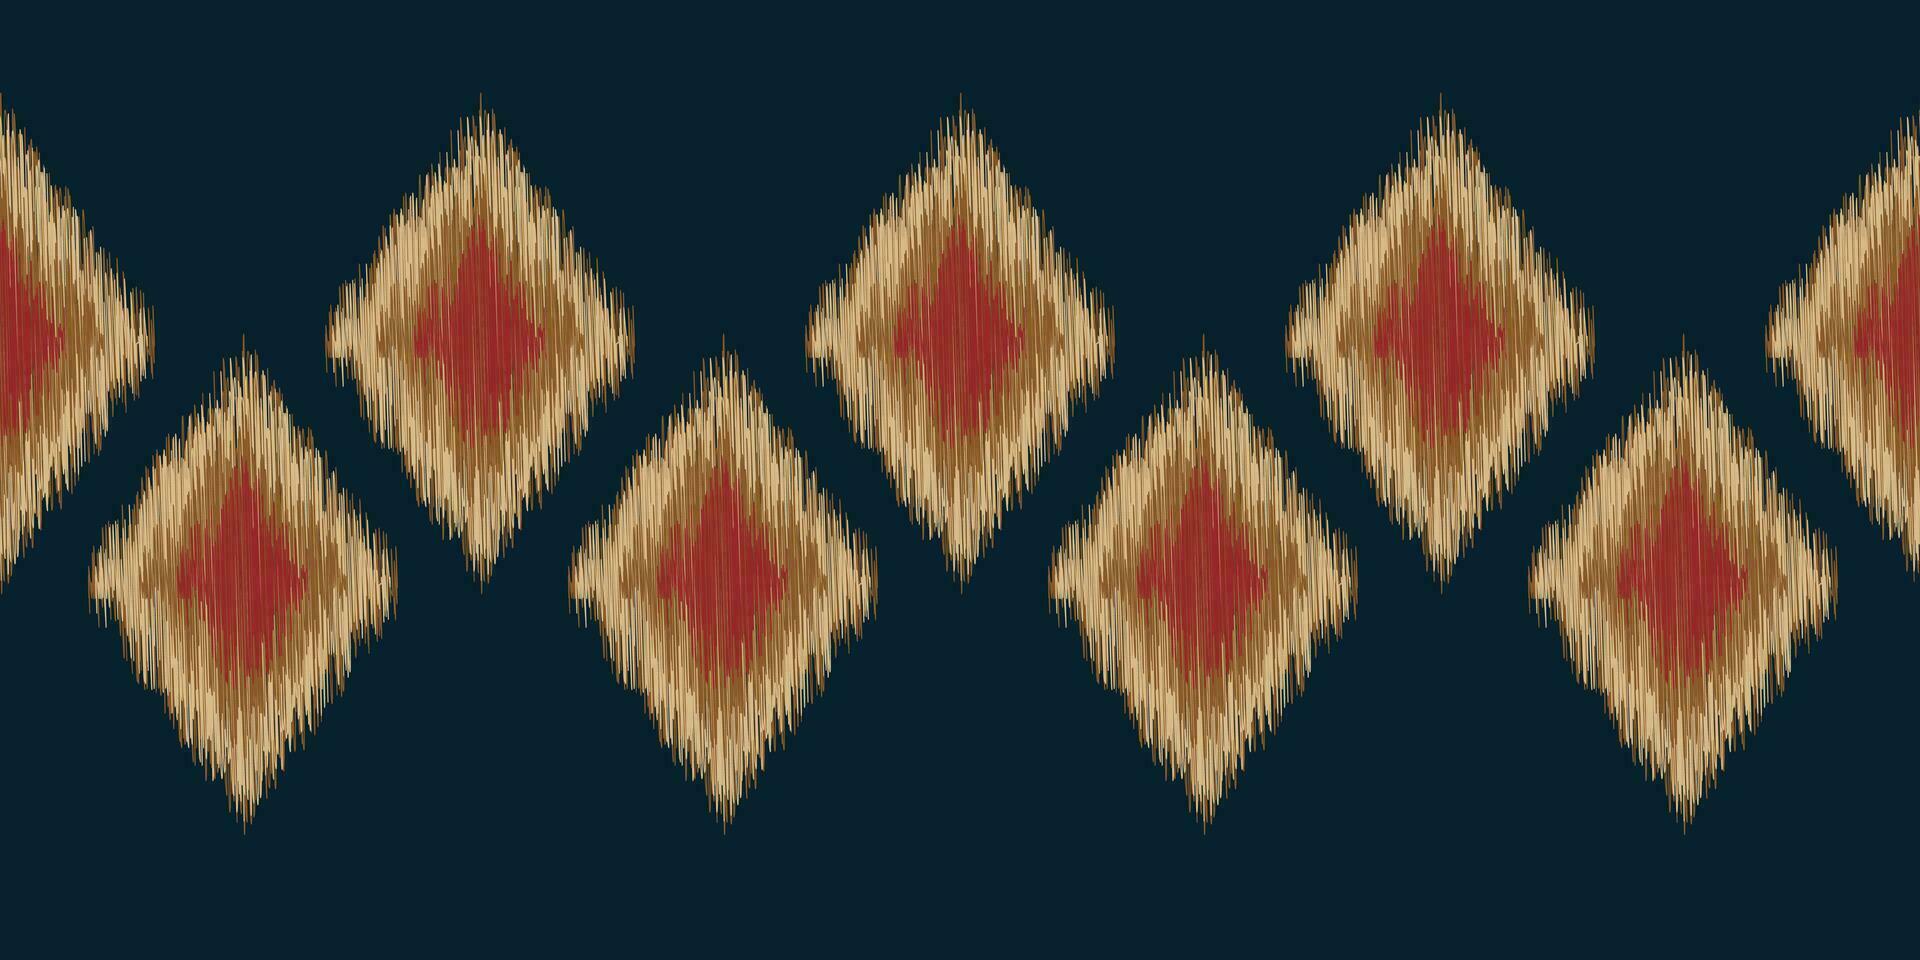 étnico ikat tela modelo geométrico estilo.africano ikat bordado étnico oriental modelo azul antecedentes. resumen,vector,ilustración.textura,ropa,marco,decoración,alfombra,motivo. vector